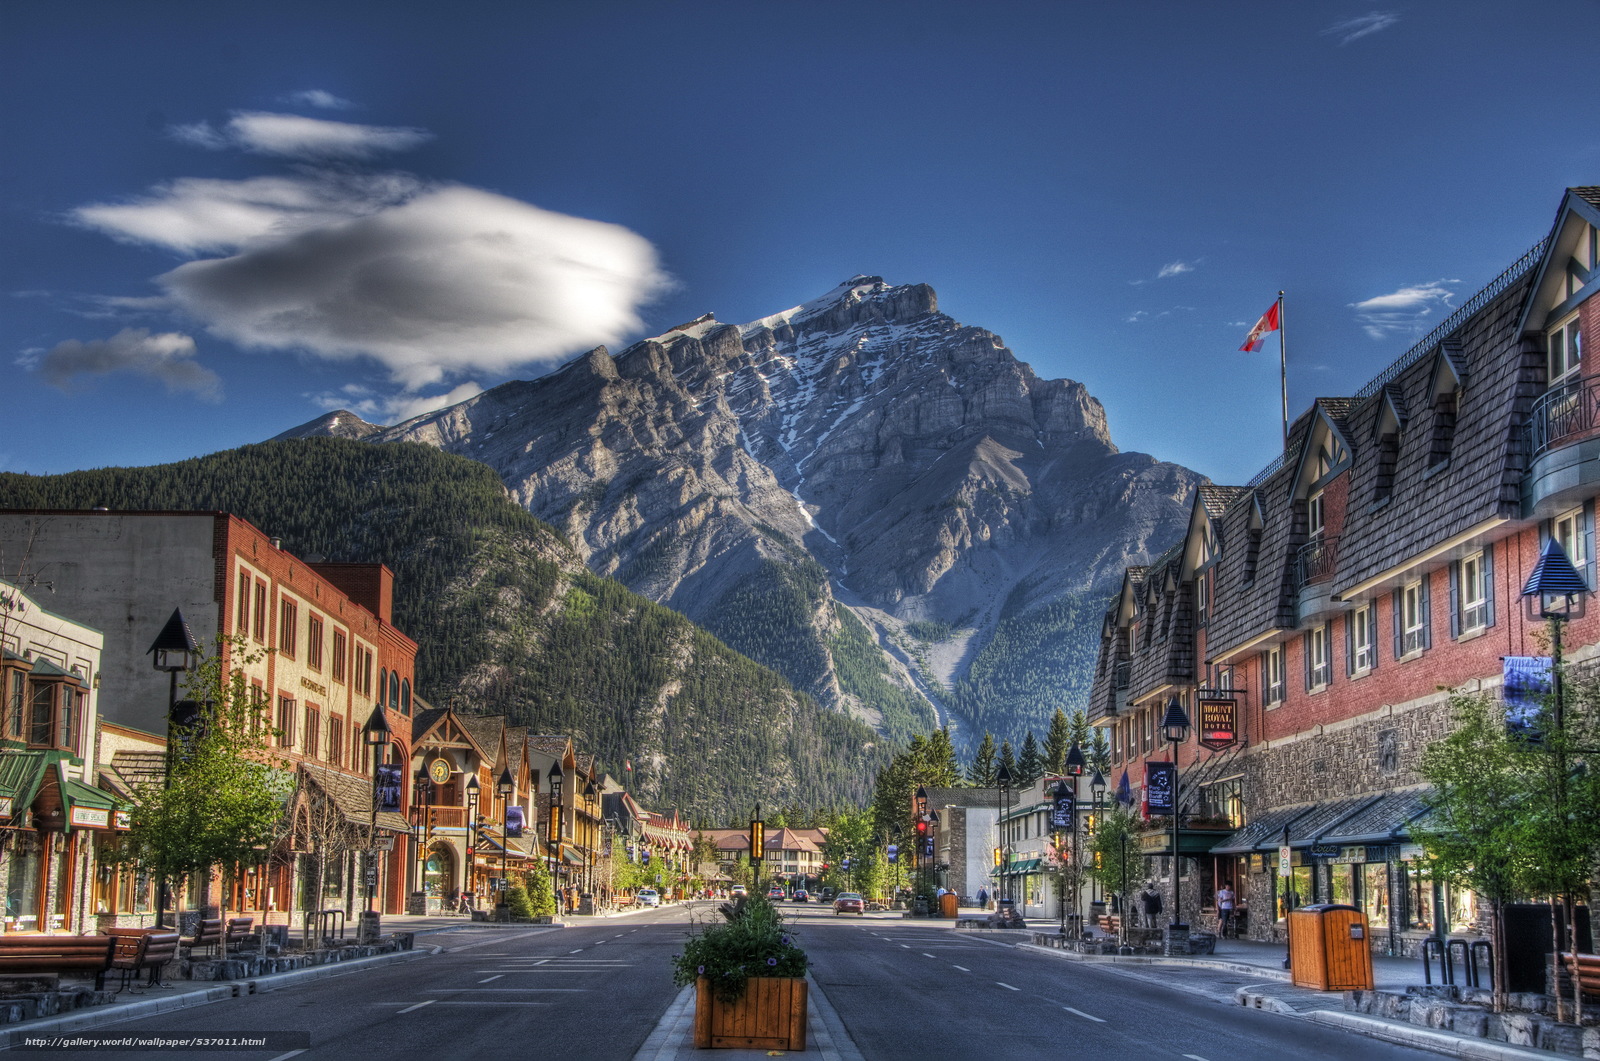 Download wallpaper Mount Royal Hotel Banff Alberta Canada free